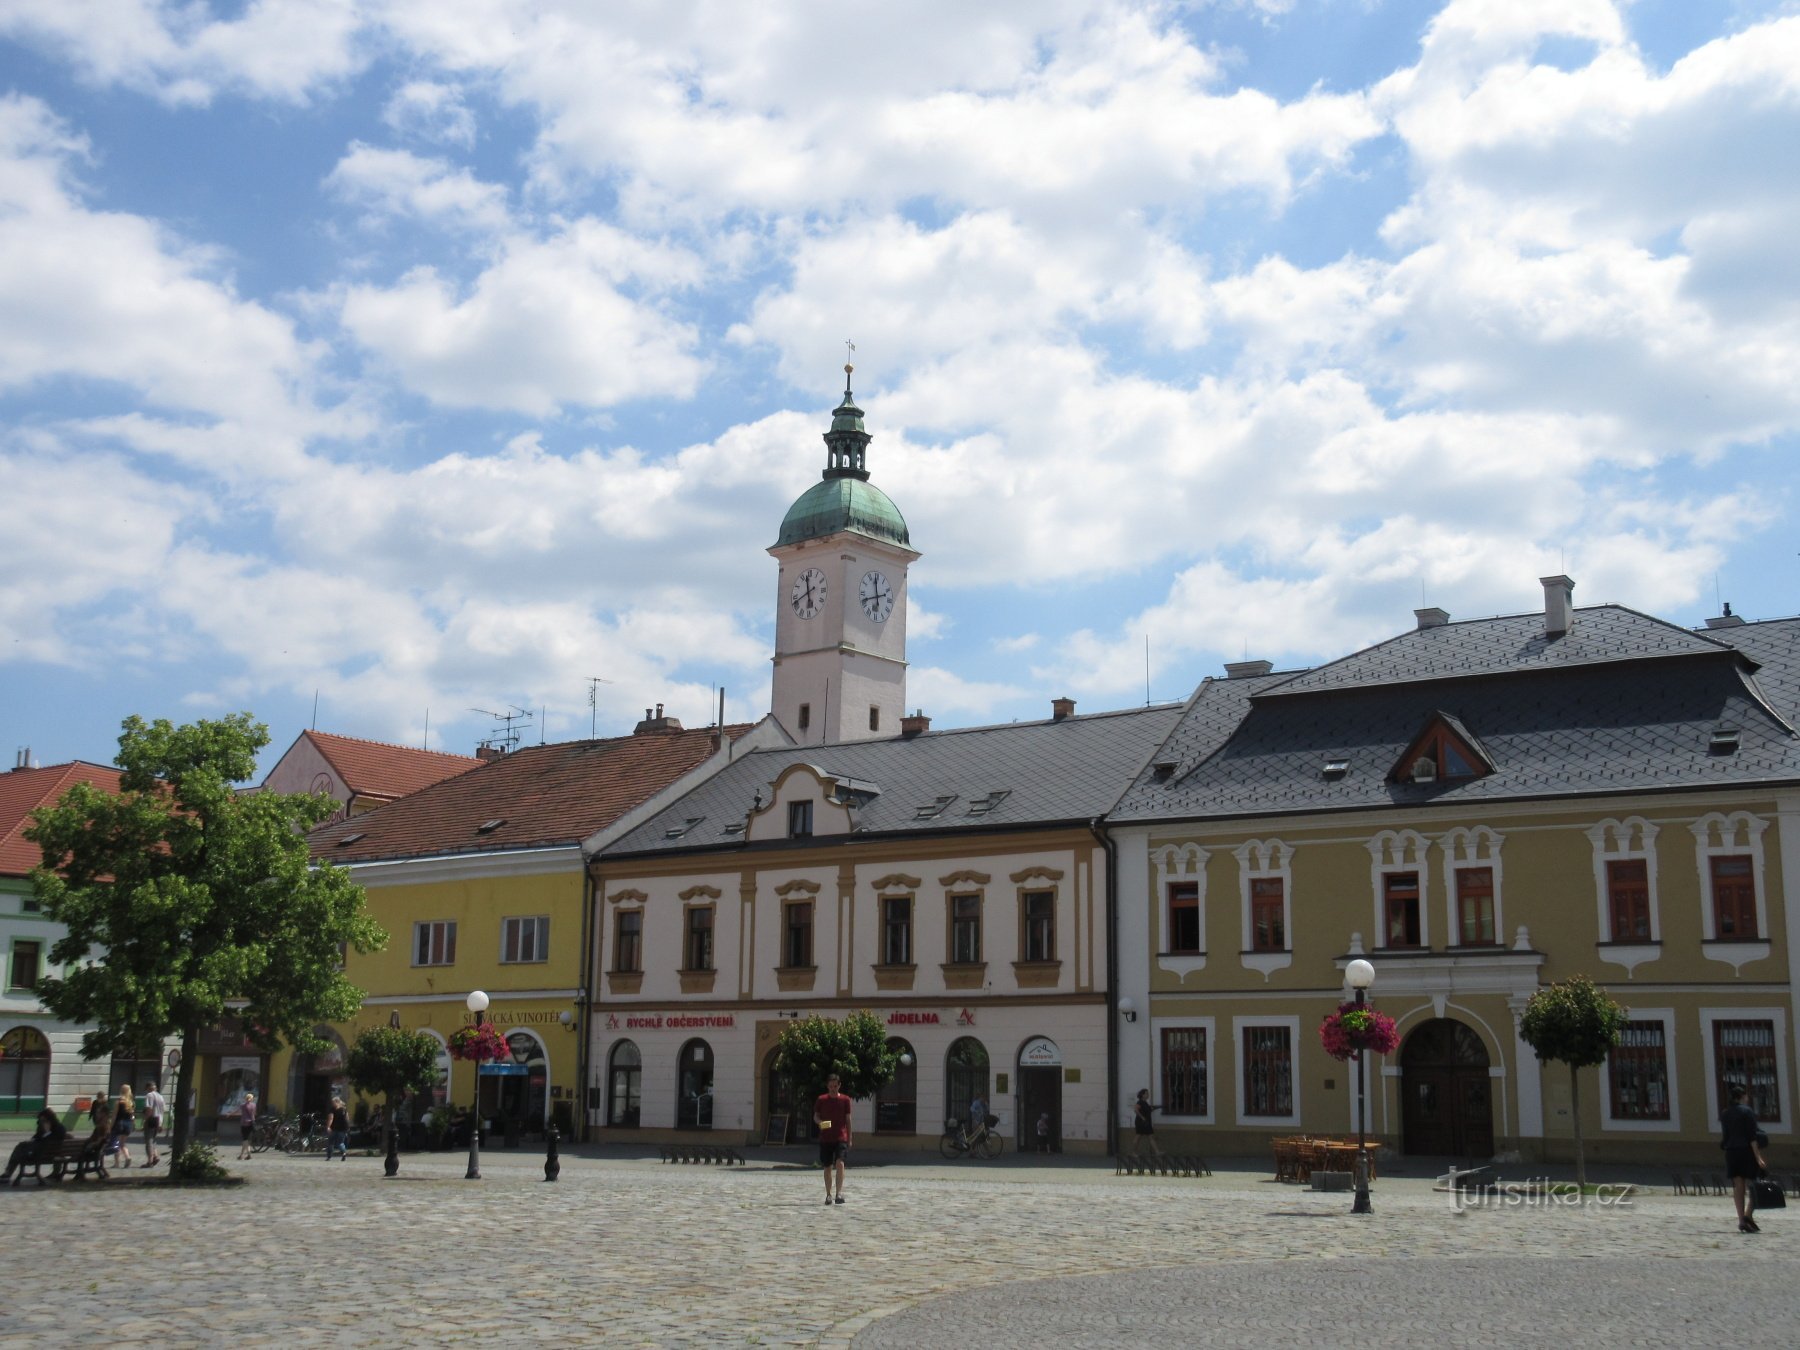 Mariánské náměstí - στα δεξιά είναι το σπίτι U Sovy, πίσω από τον πύργο του παλιού δημαρχείου